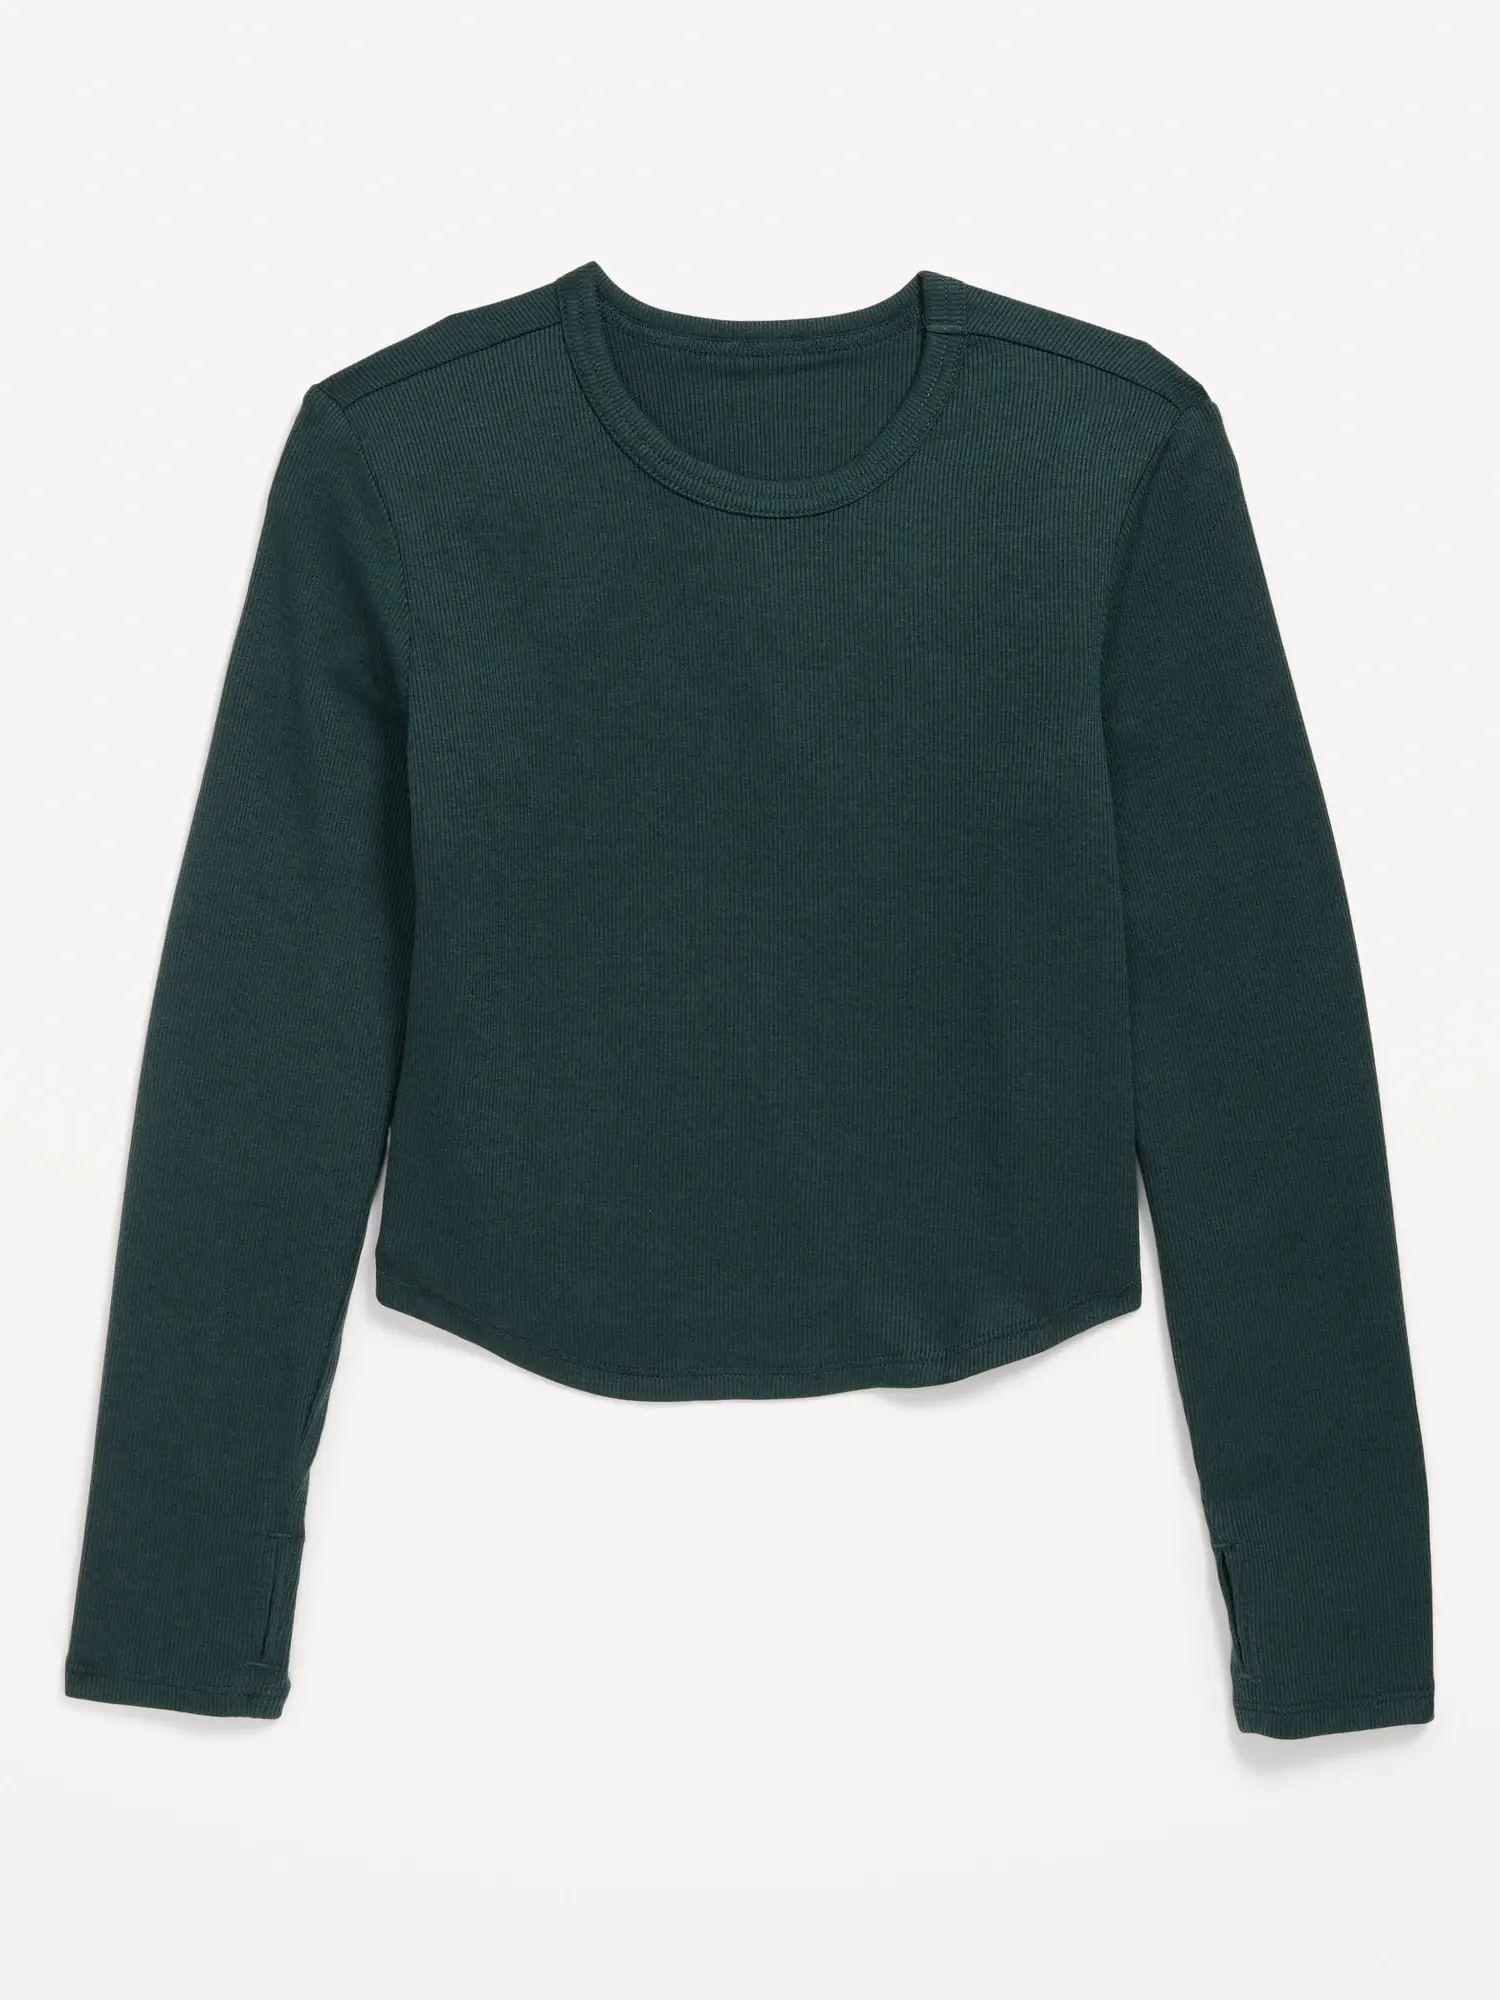 Old Navy UltraLite Long-Sleeve Rib-Knit T-Shirt for Girls green. 1